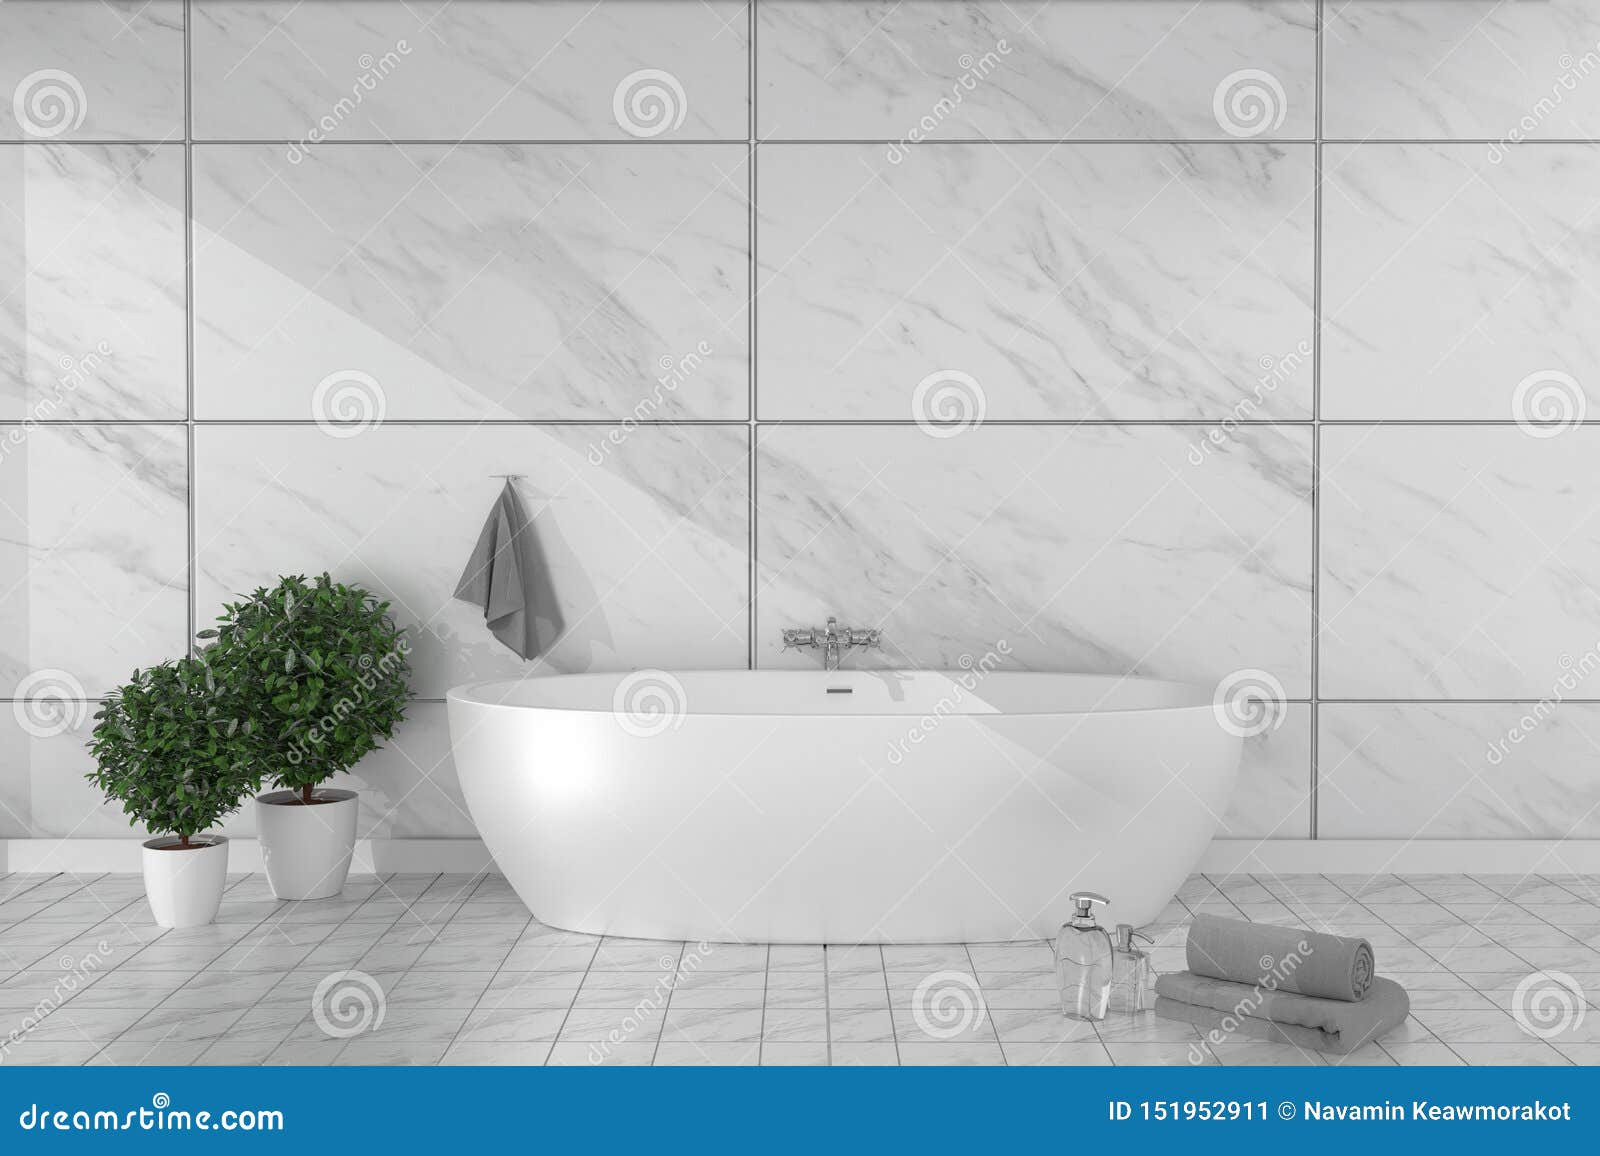 Bathroom Interior Bathtub In Ceramic Tile Floor On Granite Tiles